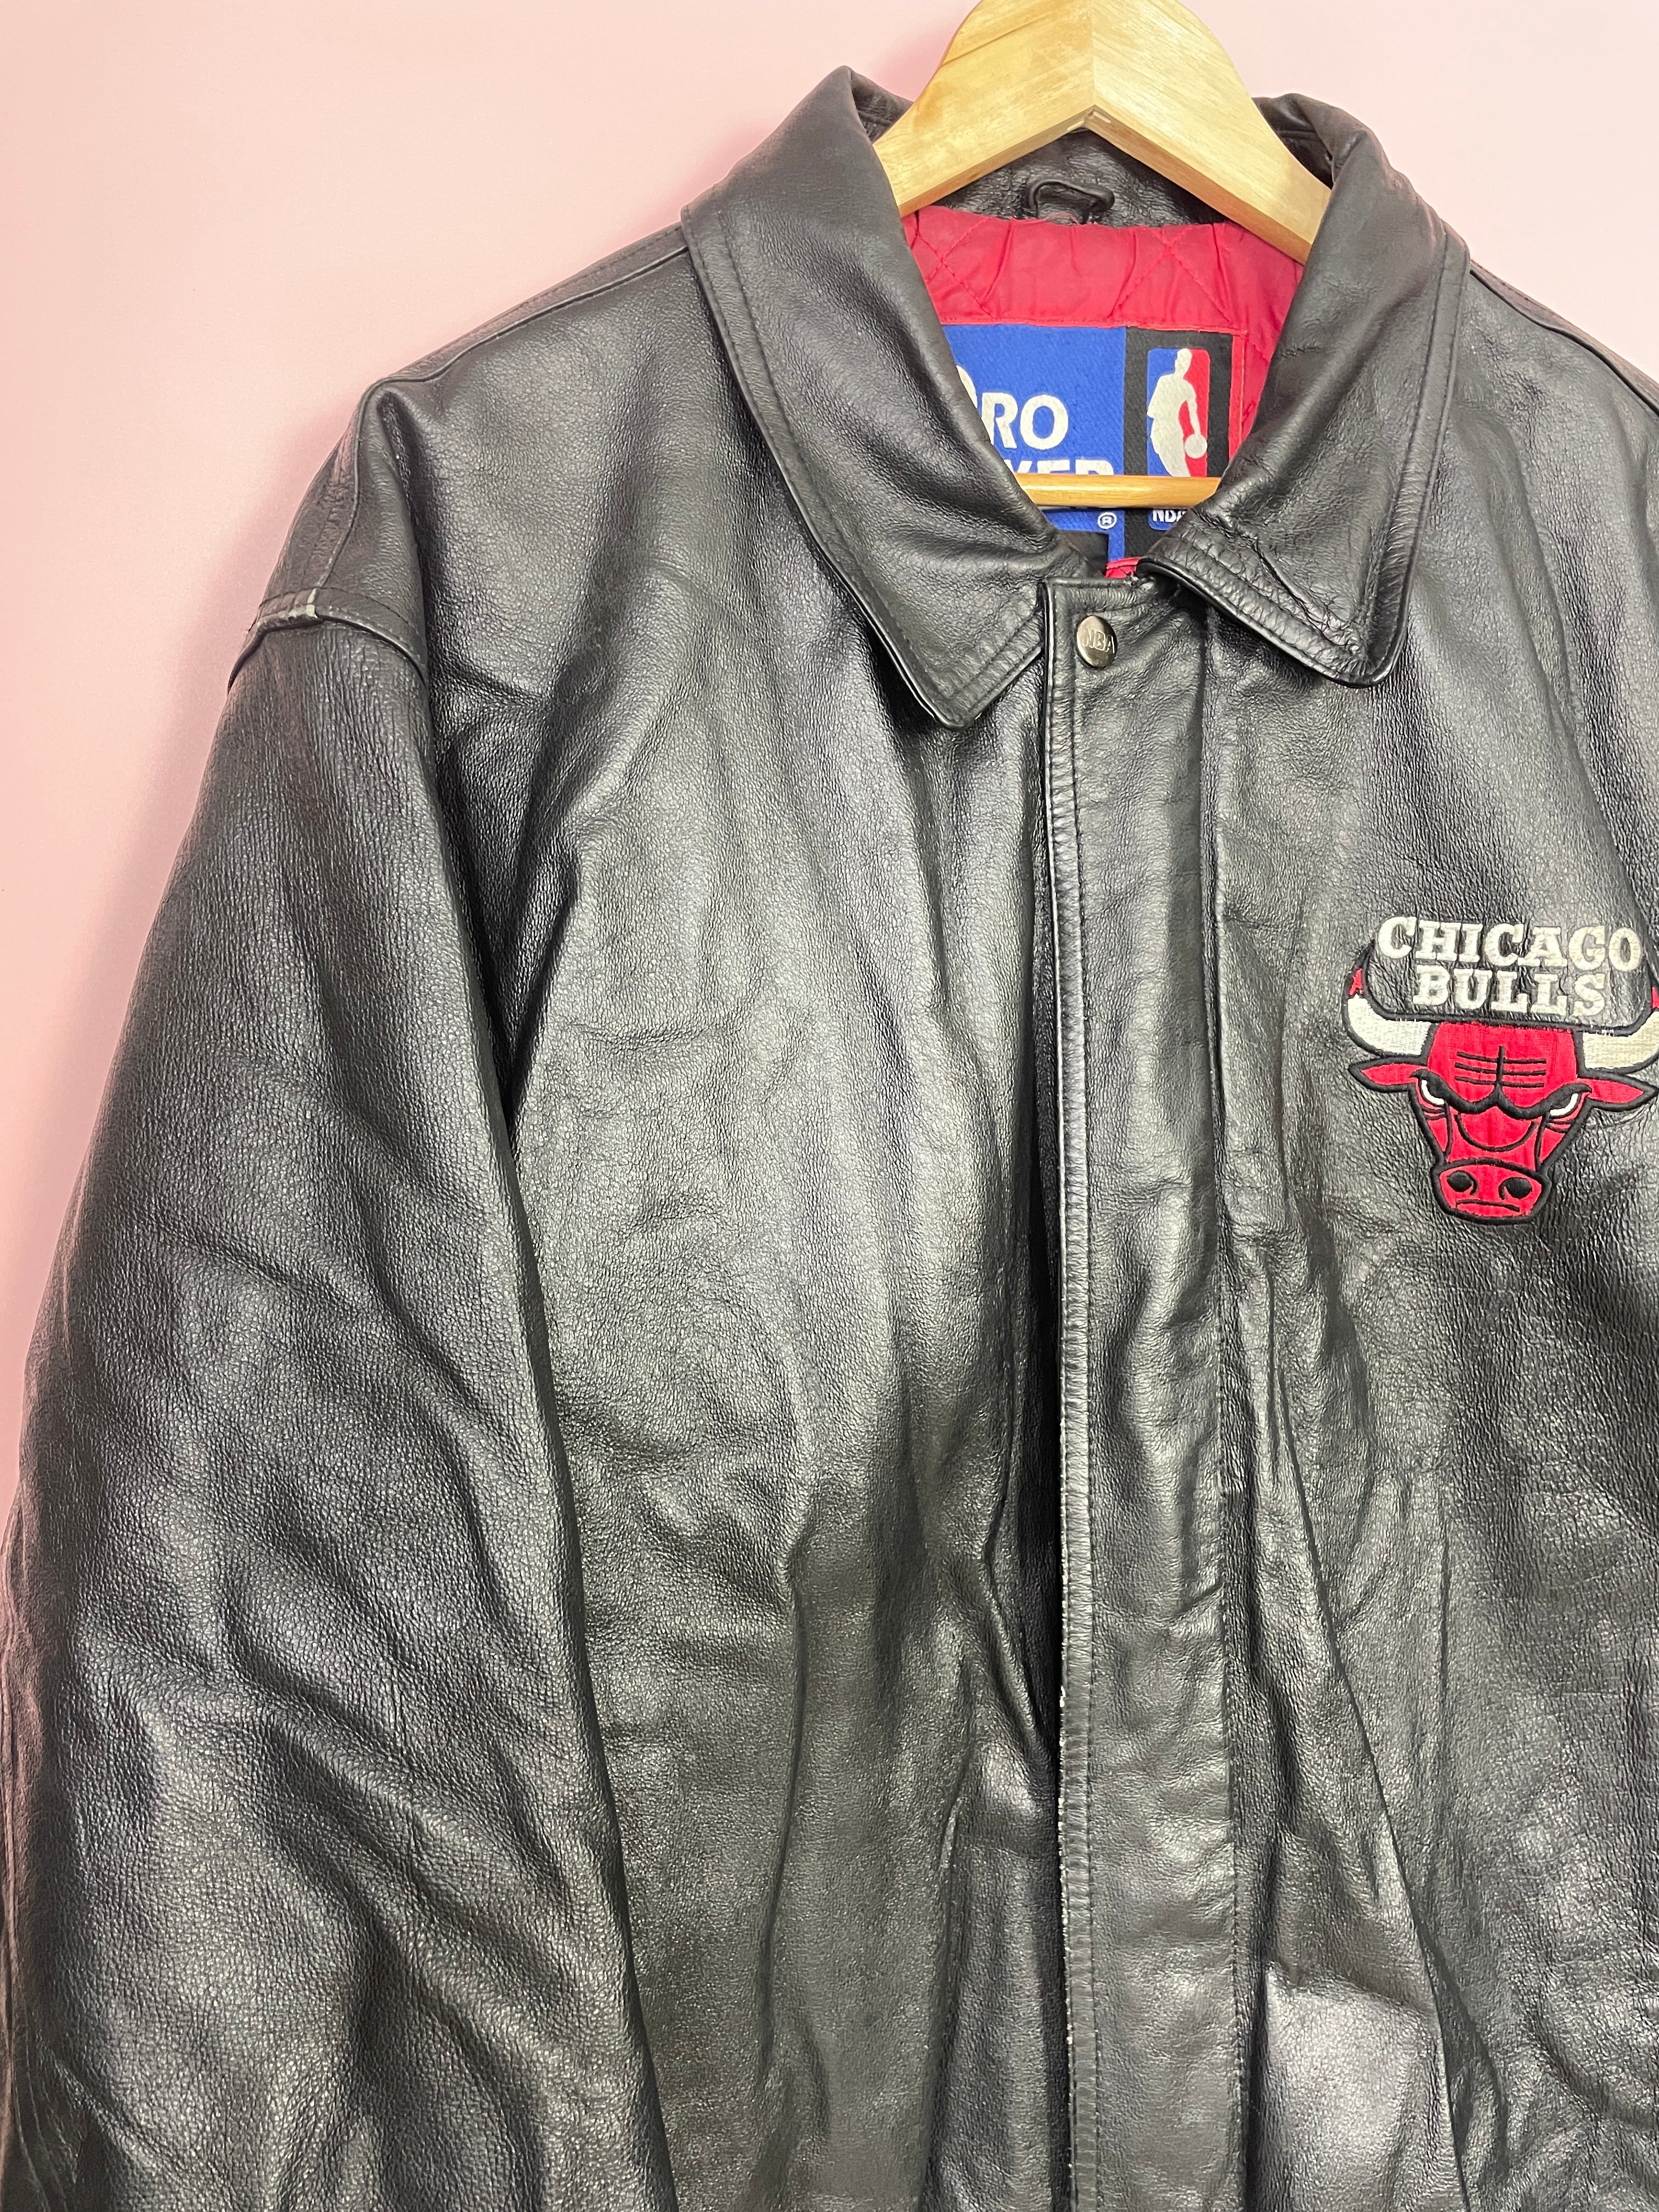 L-XL Vintage Chicago Bulls Jacket Leather Jacket